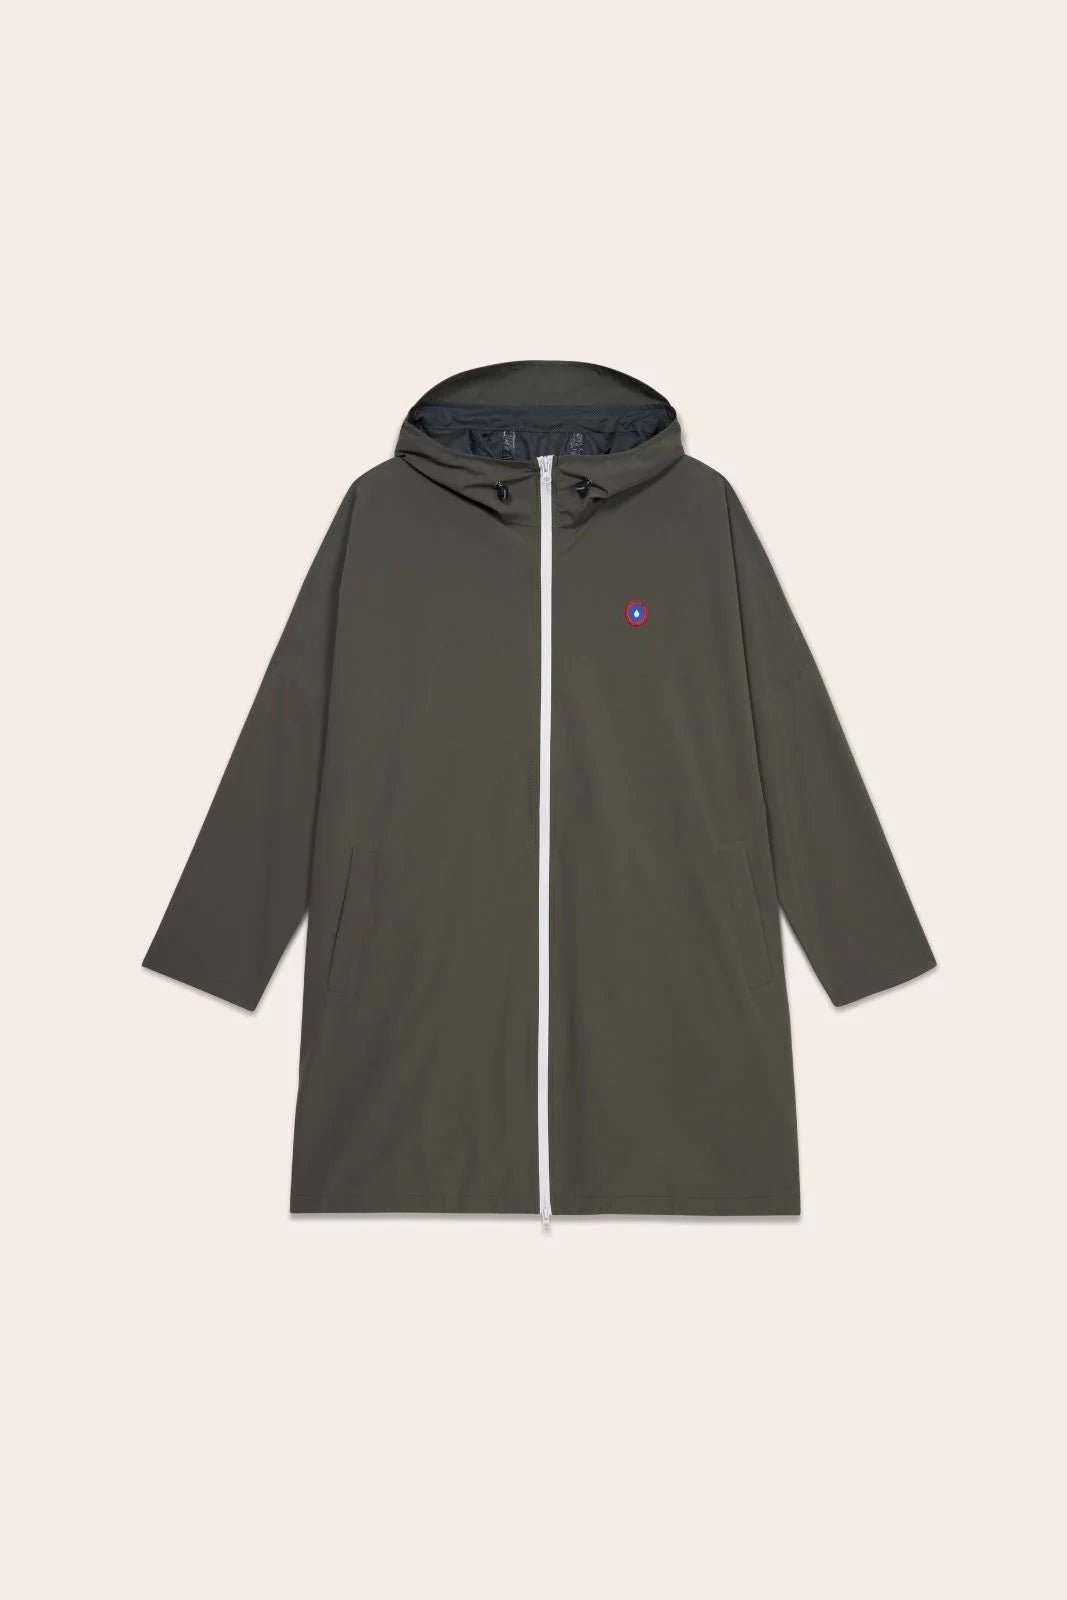 iberté - Rain cape - Baggable windbreaker jacket - Flotte #couleur_kaki